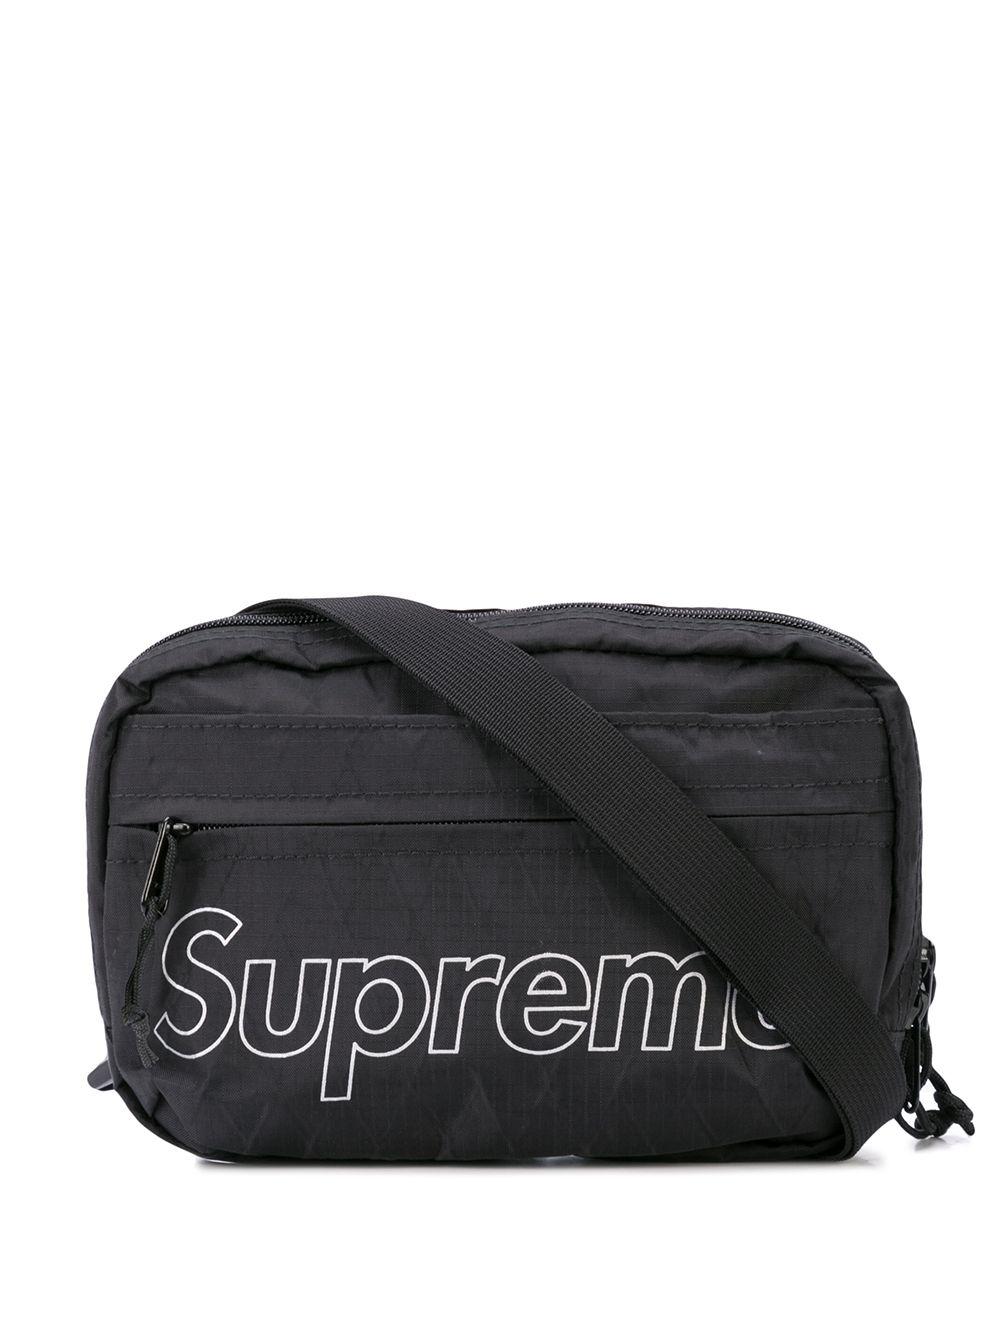 Supreme Logo Shoulder Bag - Farfetch